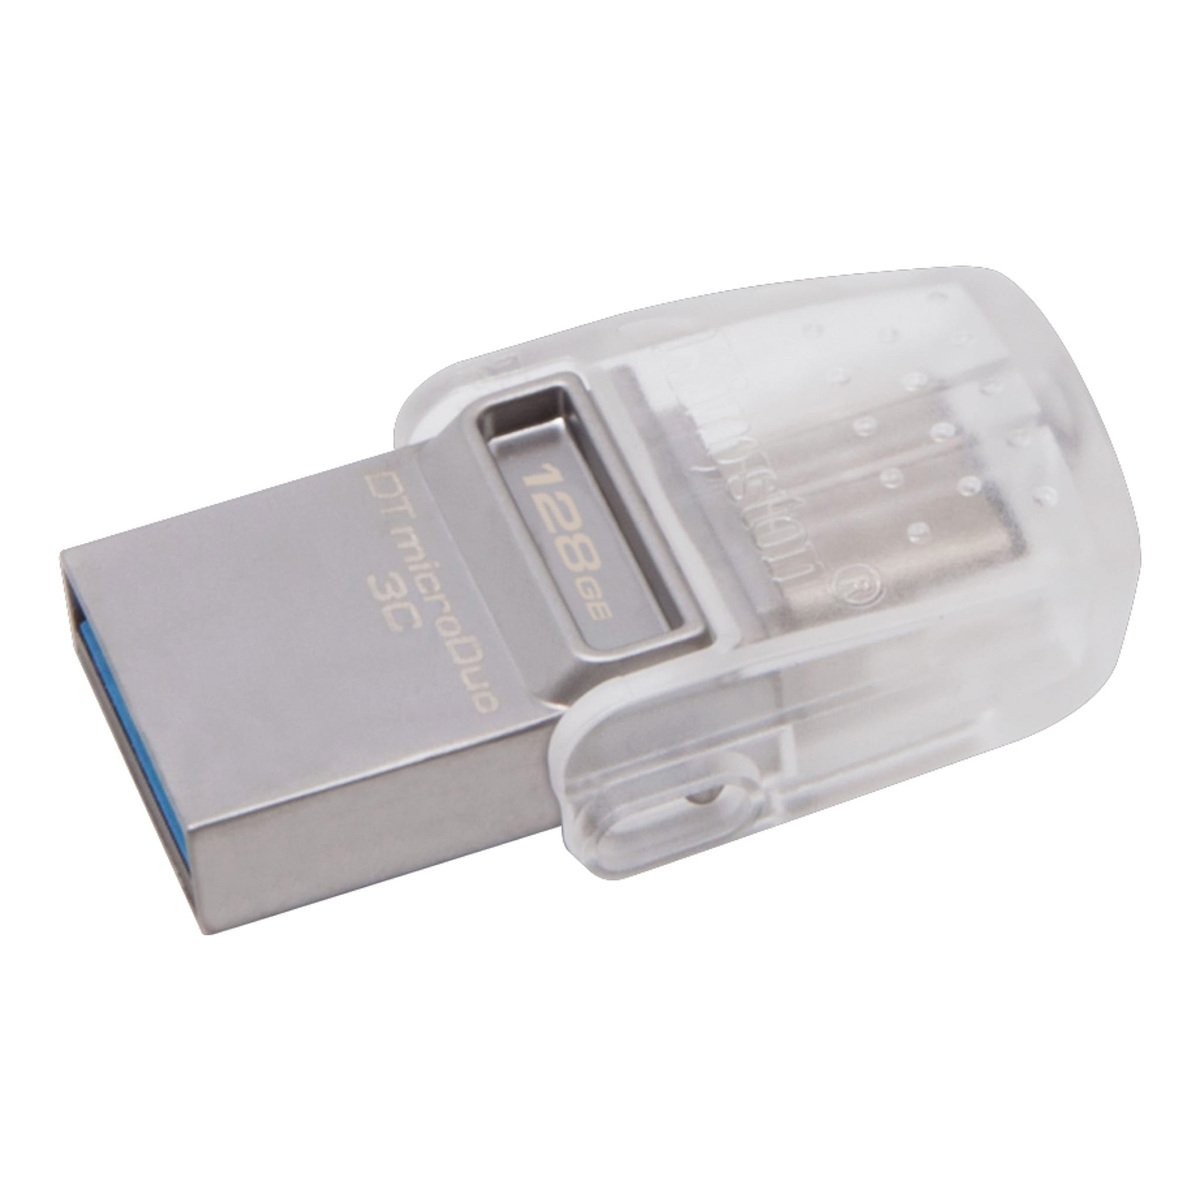 Kingston DataTraveler MicroDuo 3C USB Flash Drive DTDUO3C 128GB